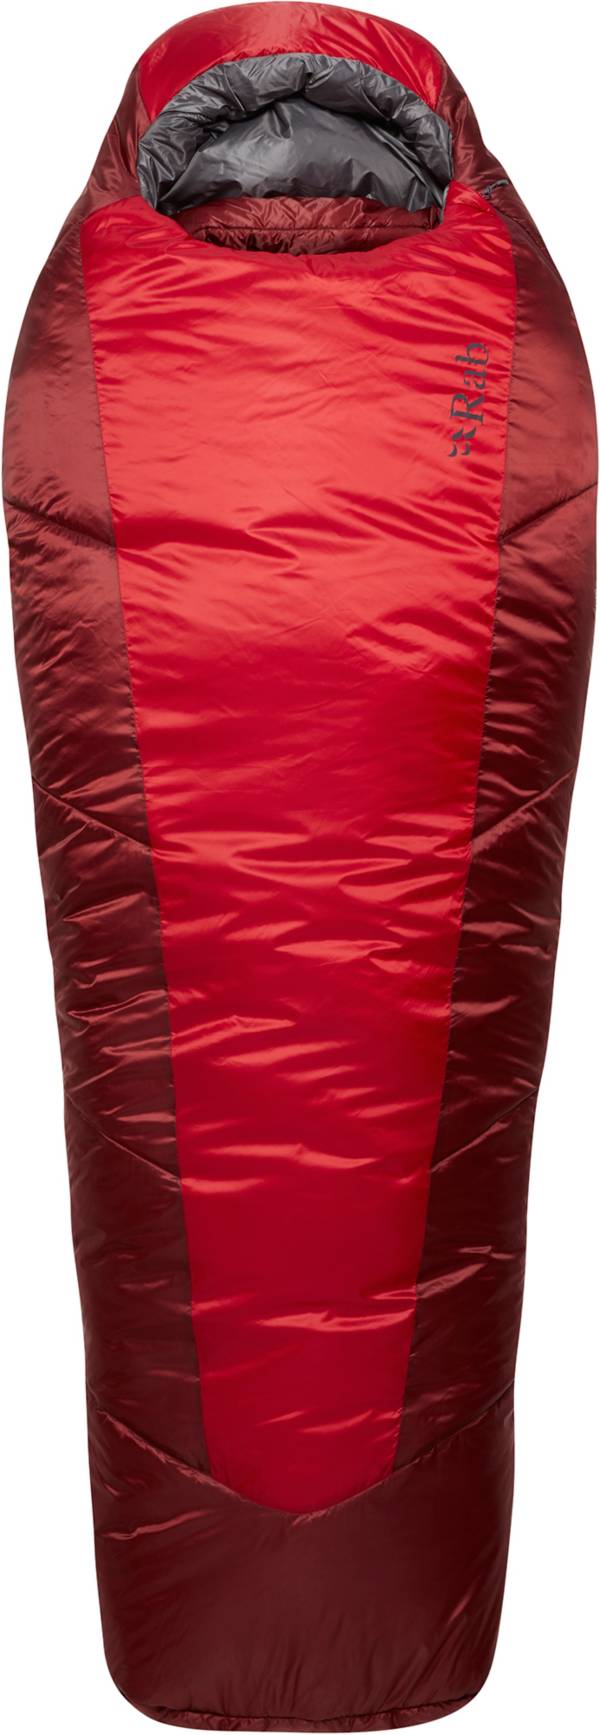 Rab Women's Solar Eco 3 Sleeping Bag 20°F product image